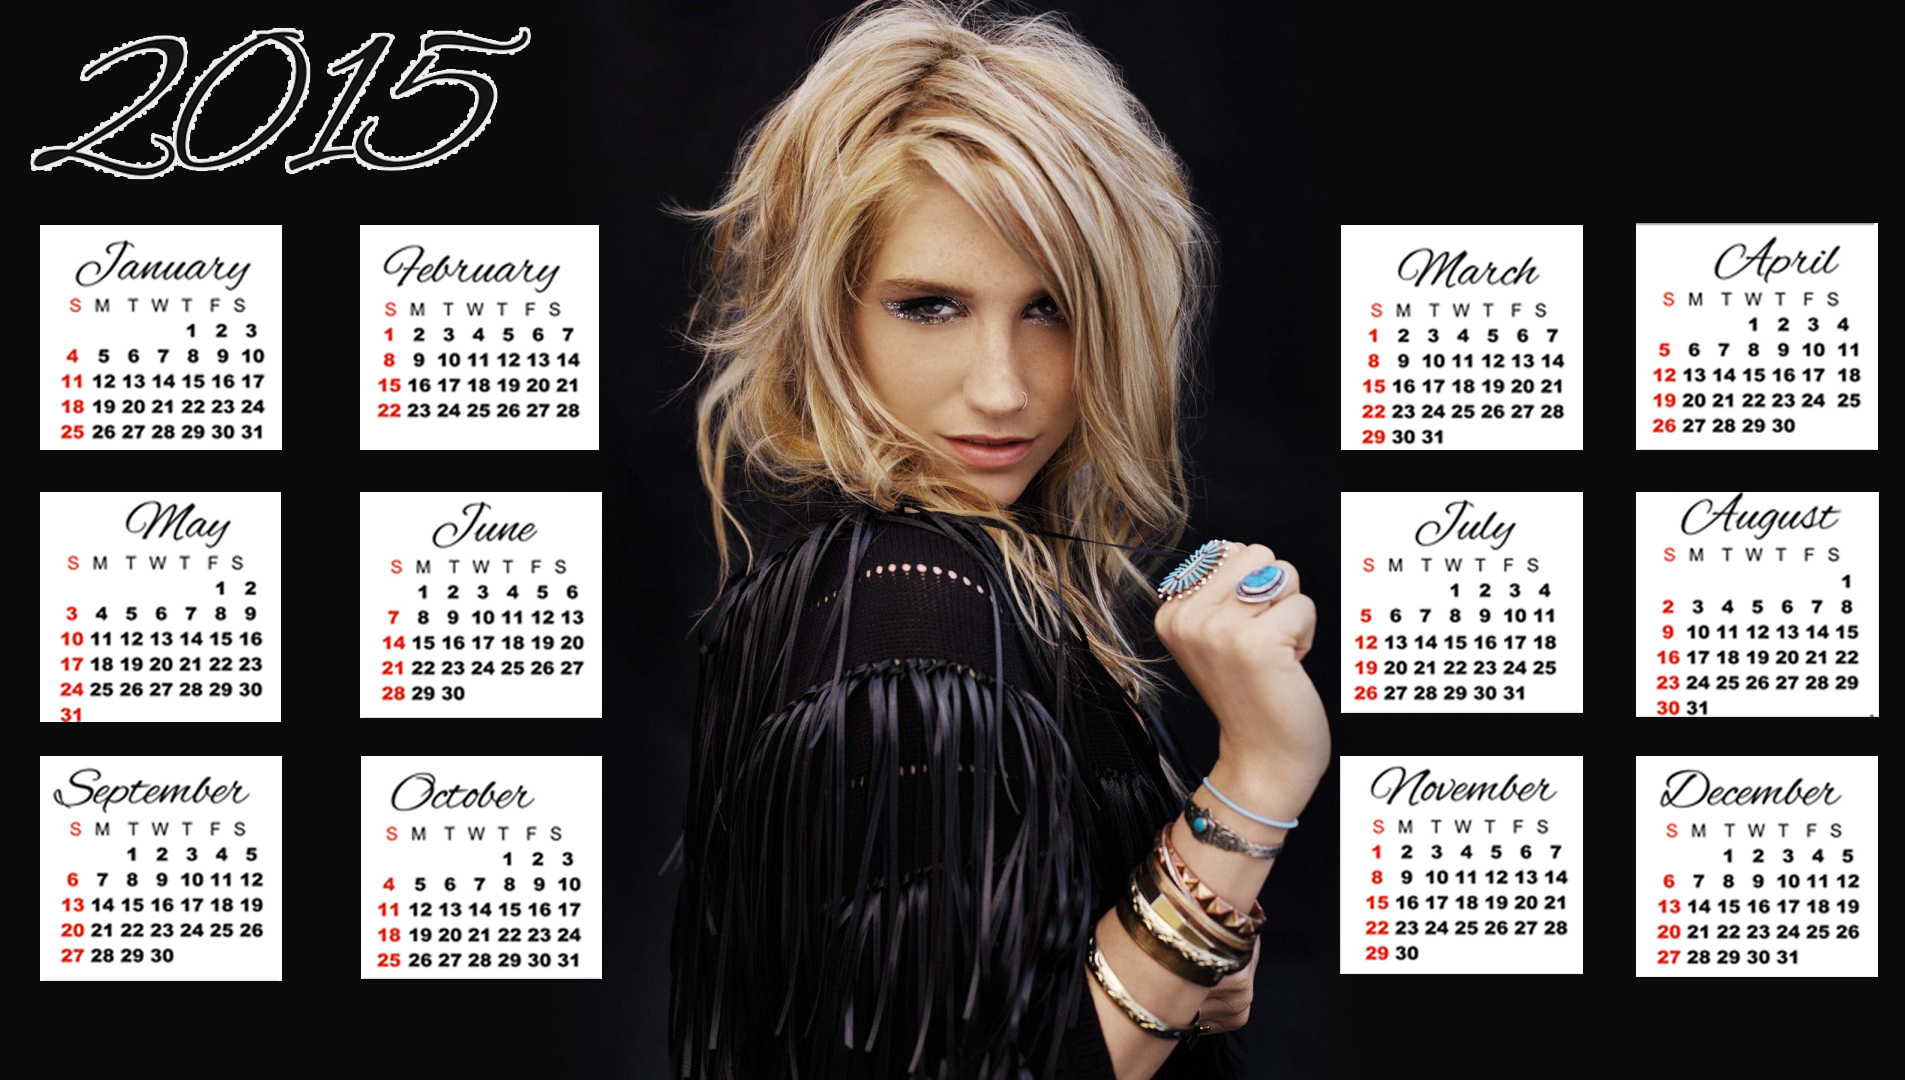 kesha hair style wallpaper calendar 2015